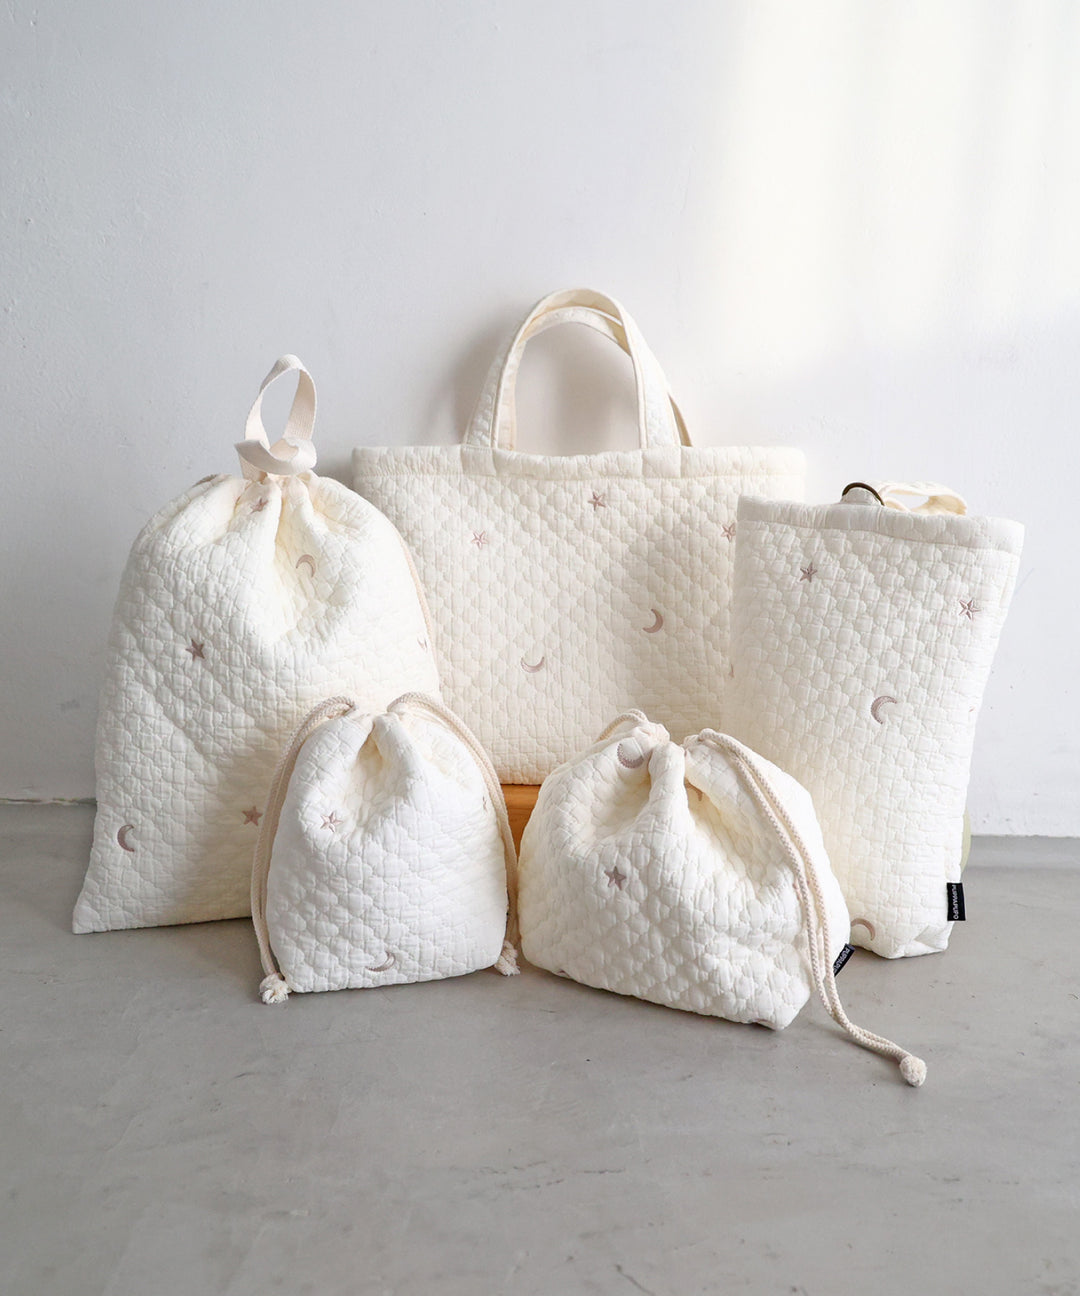 Drawstring bags (Ibul fabric with Moroccan design)